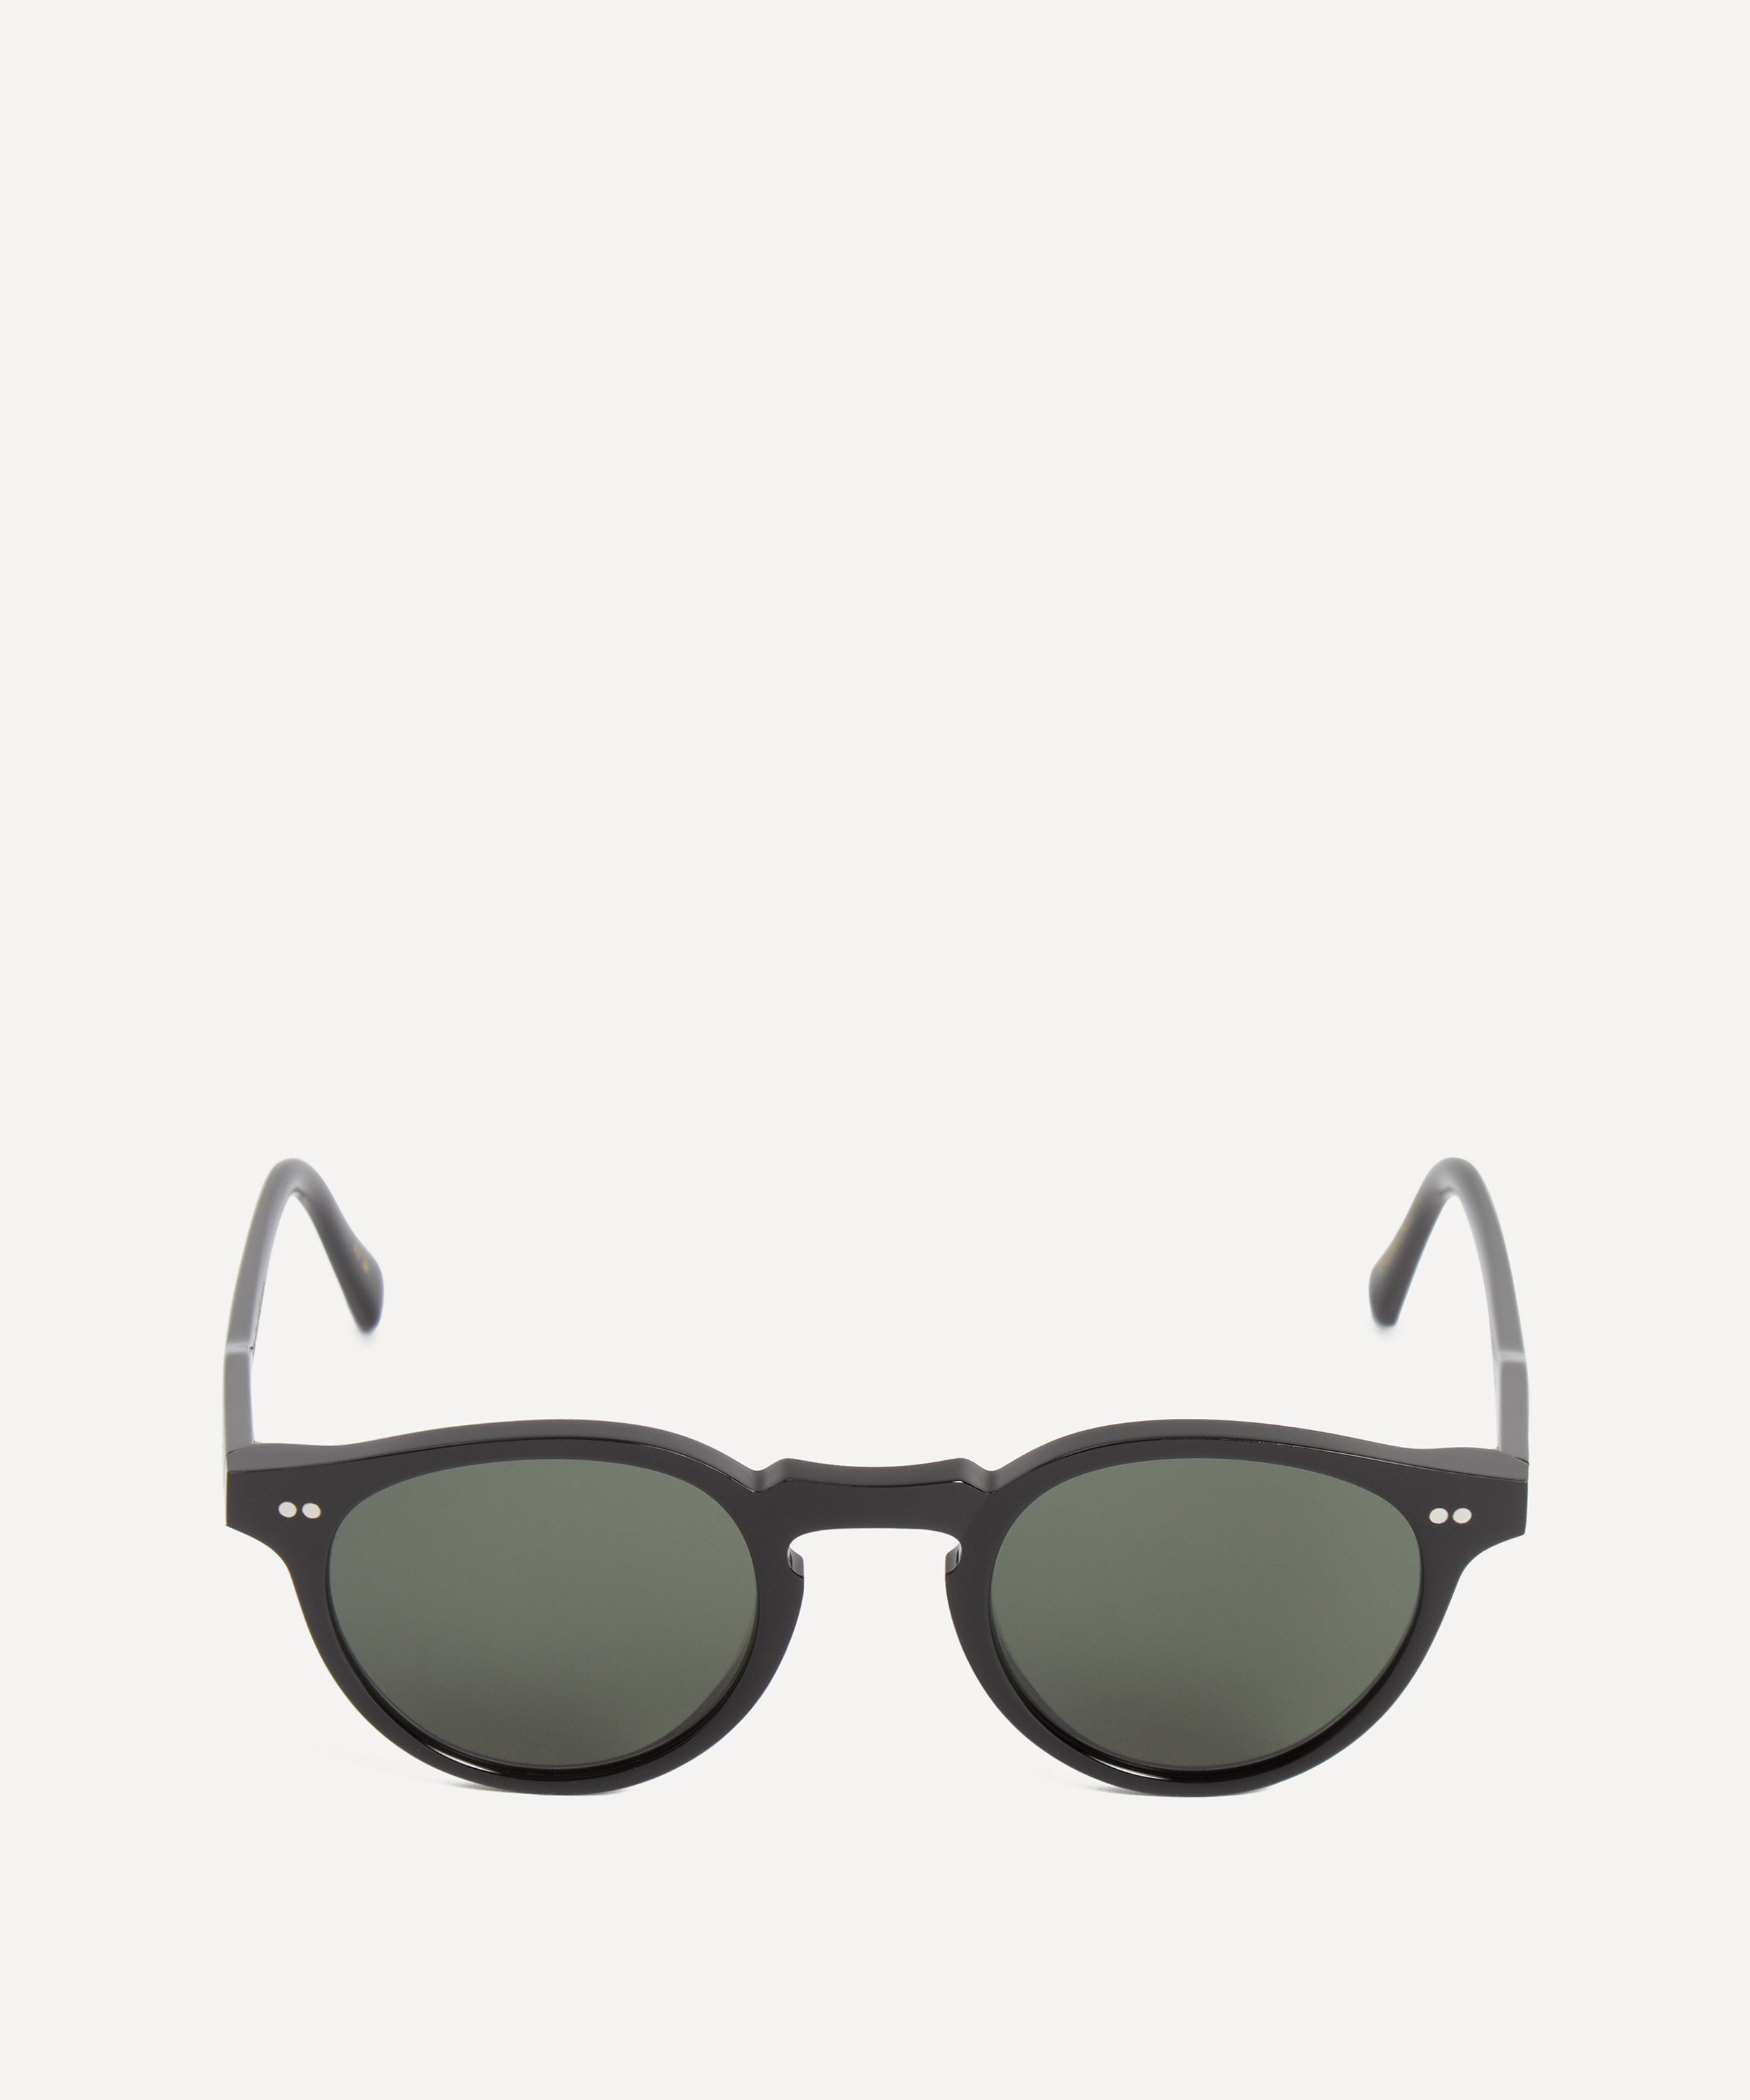 Monokel Eyewear - Forest Round Sunglasses image number 0